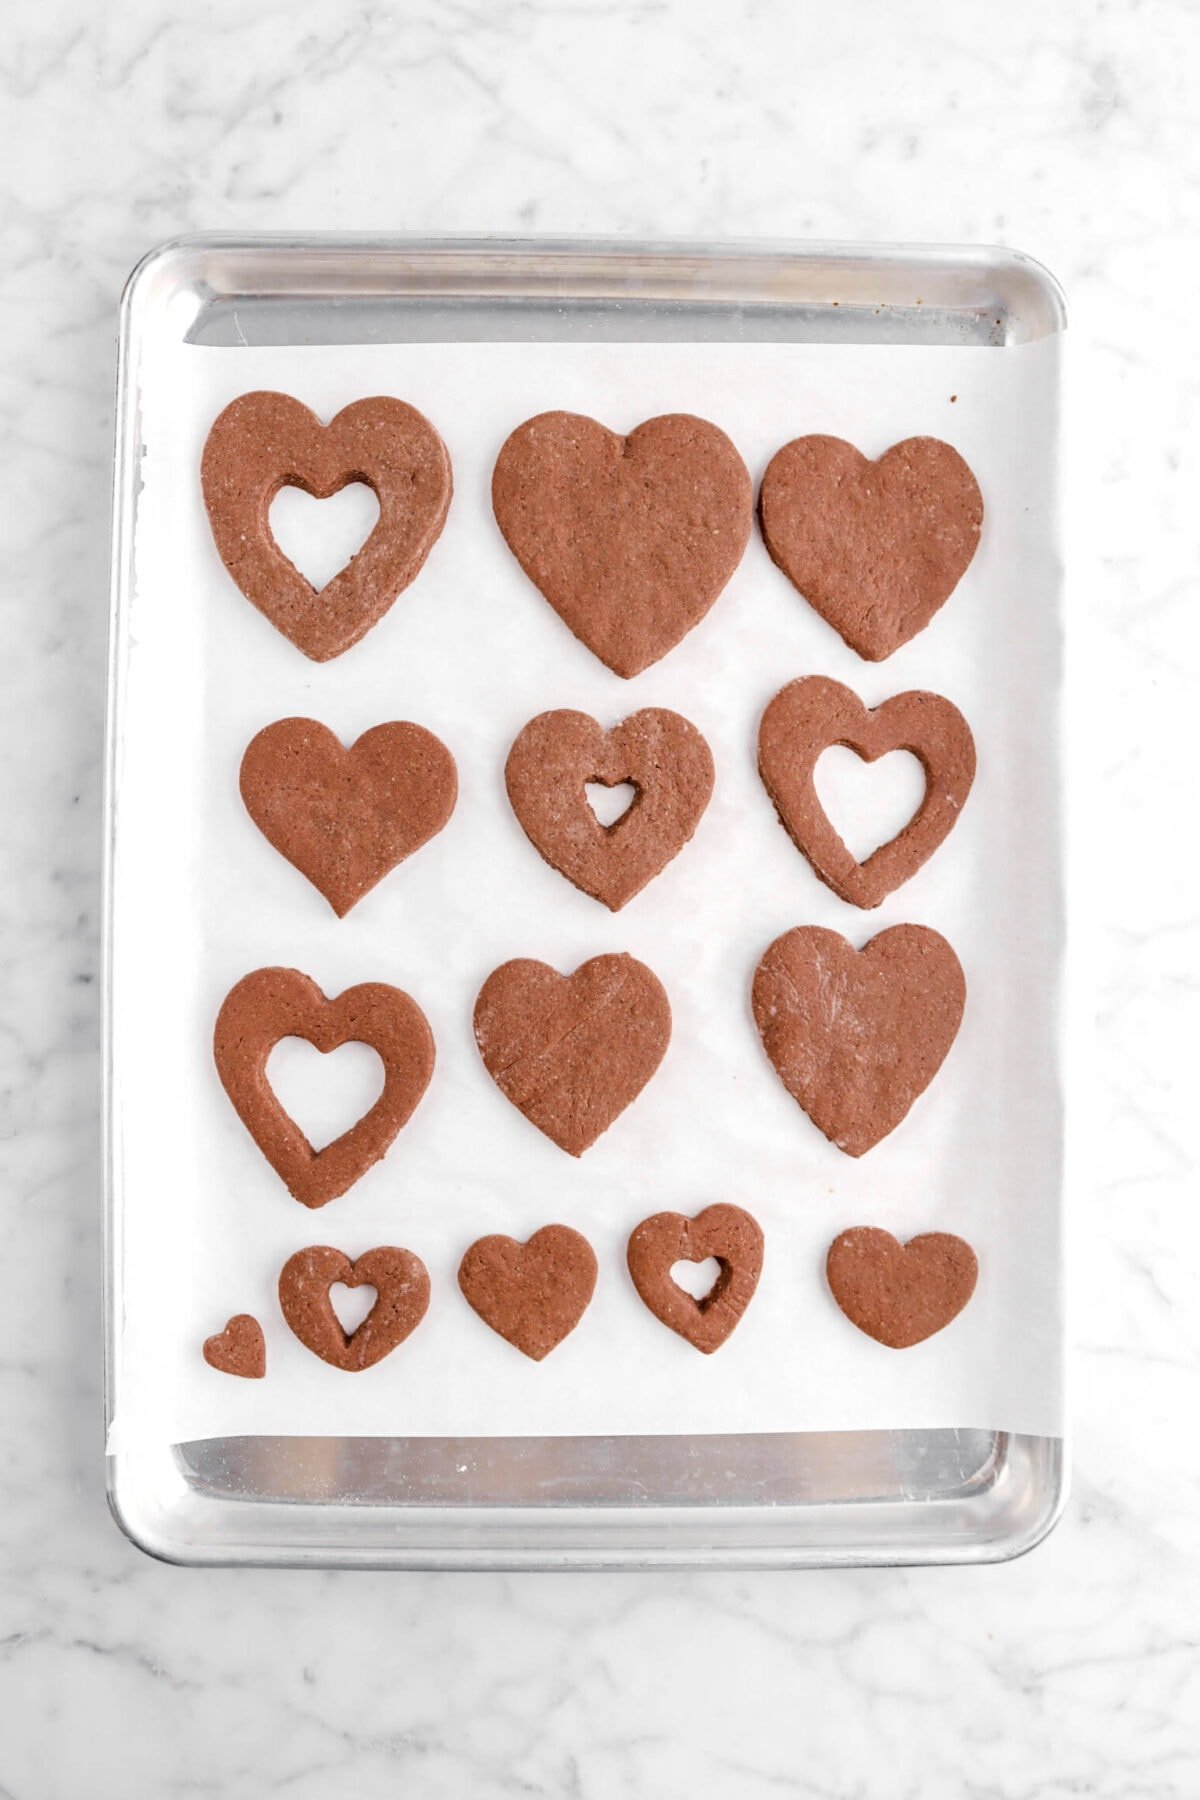 baked chocolate hearts on sheet pan